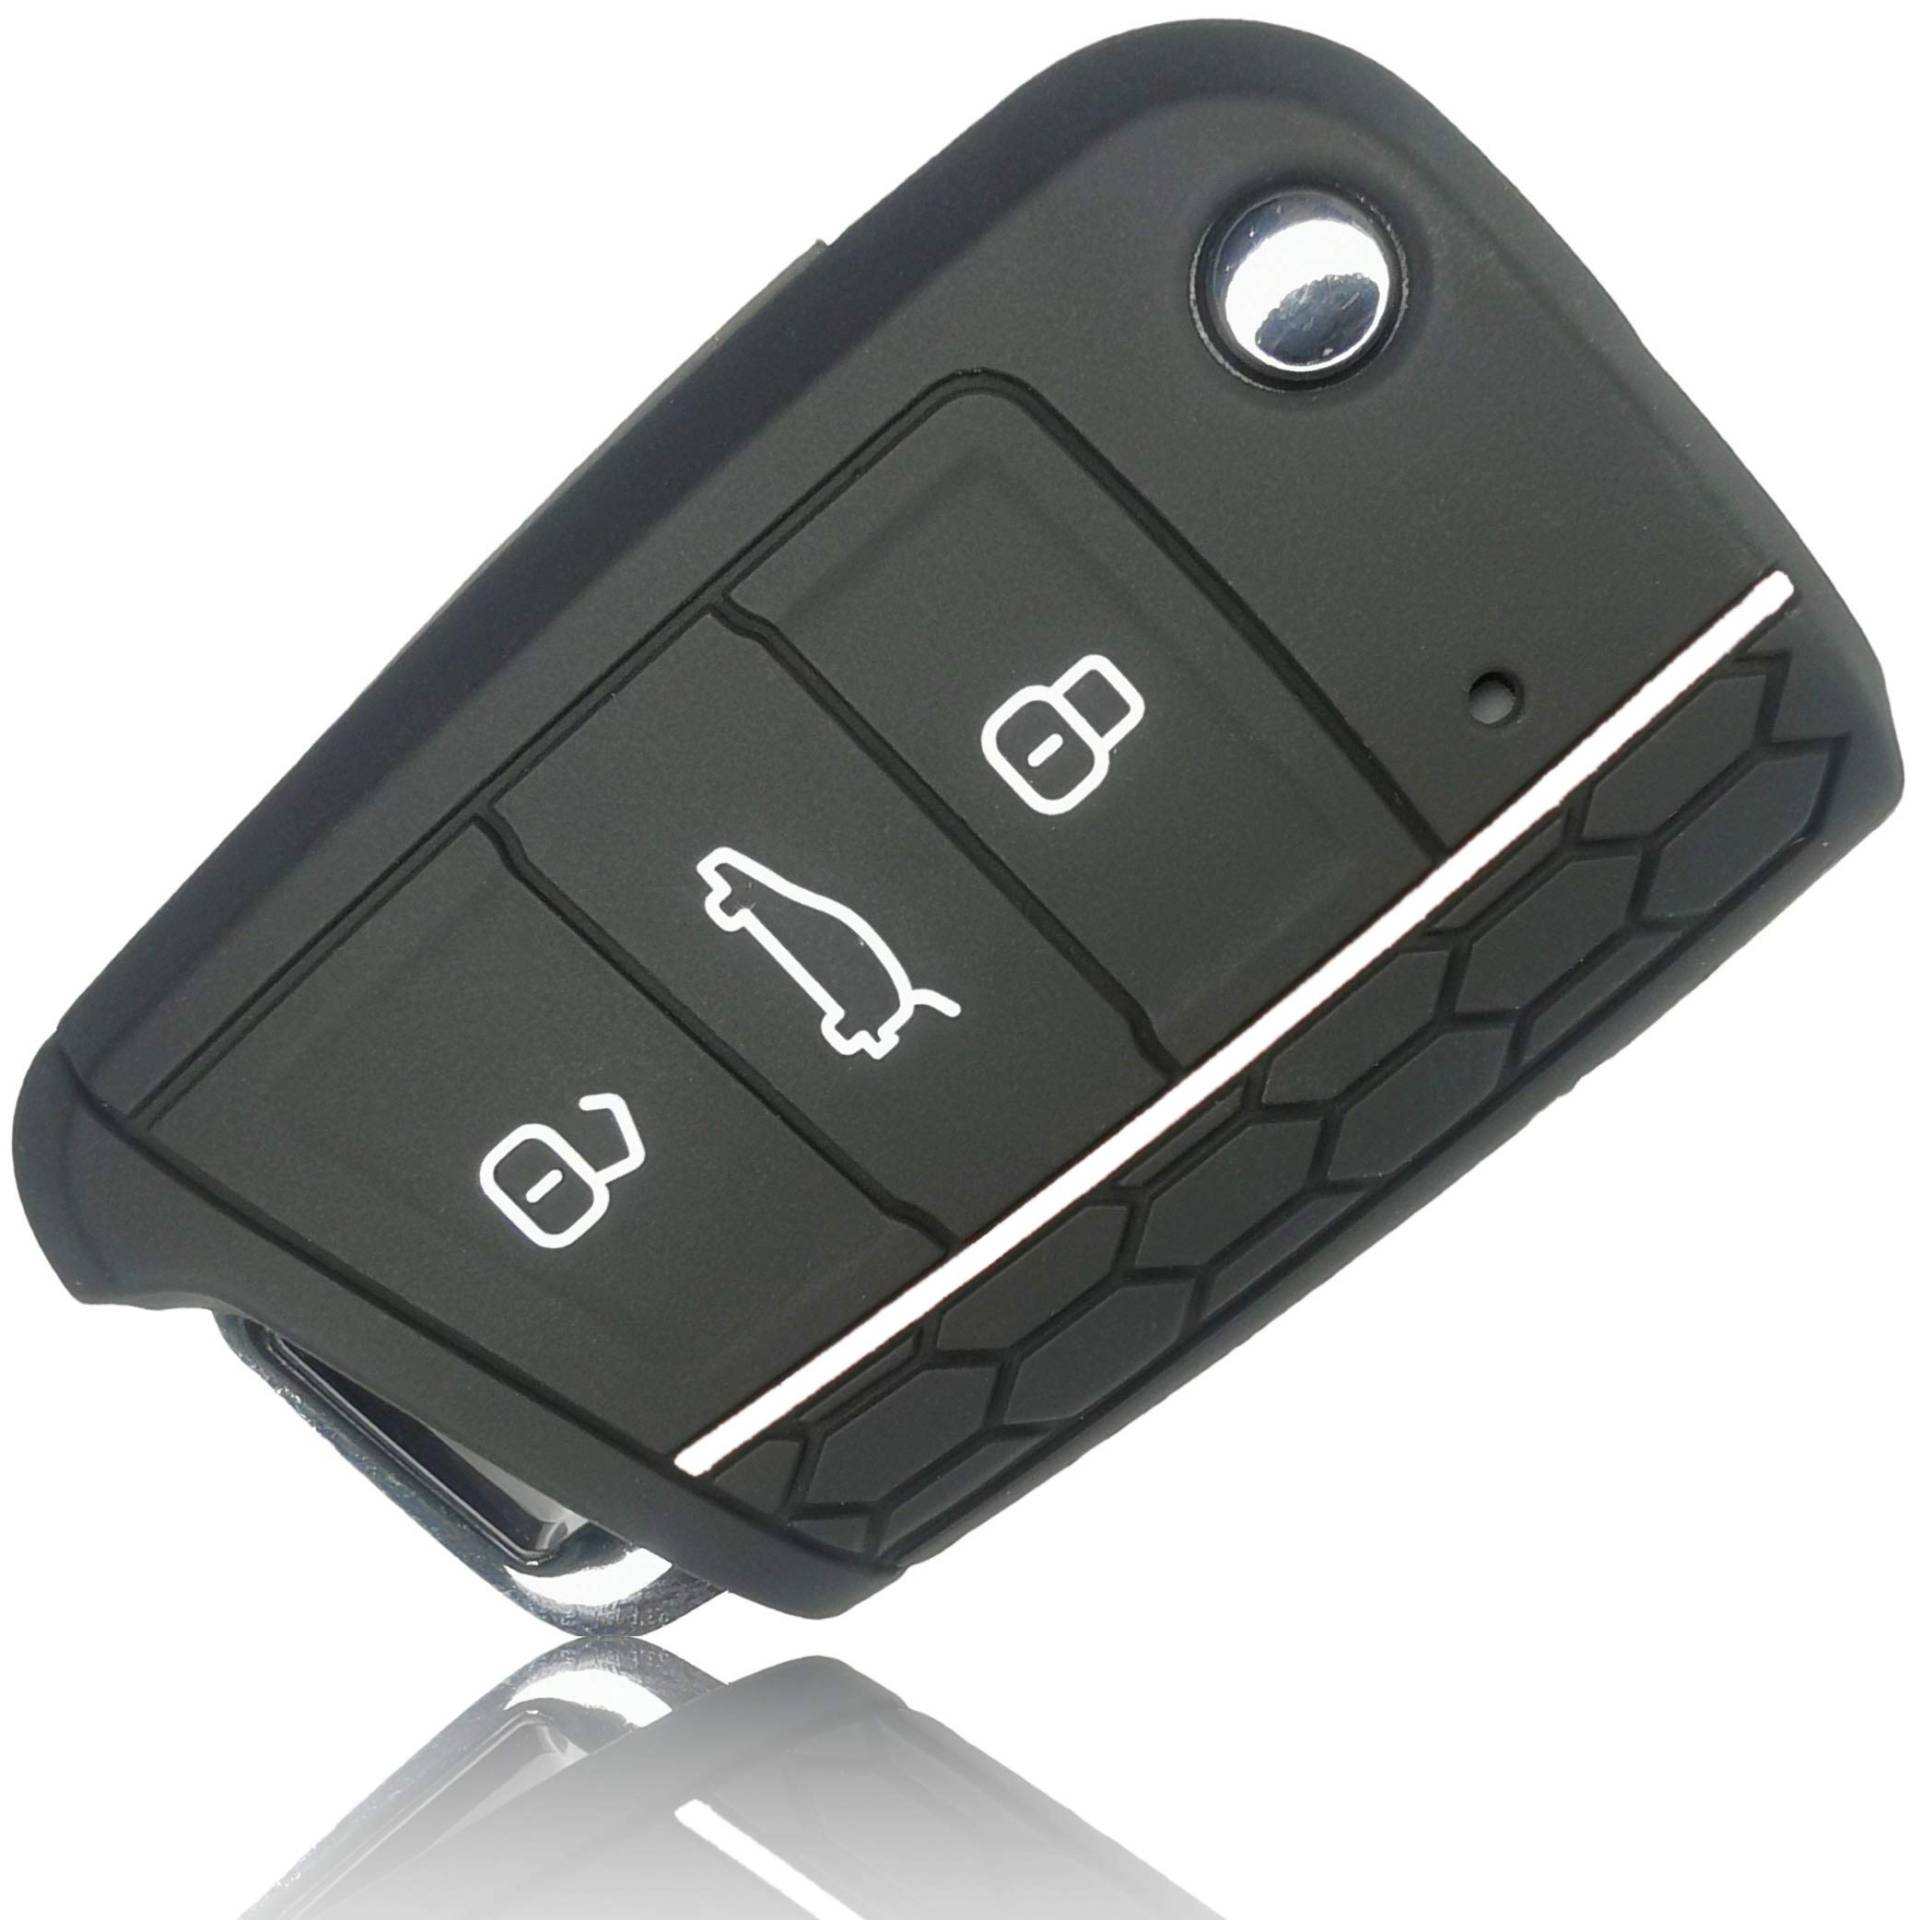 FOAMO Autoschlüssel Hülle Kompatibel mit VW Golf 7, SEAT, SKODA Autoschlüssel Silikon-Hülle Schlüssel-Hülle Schutz-Hülle für Autoschlüssel Schwarz Weiß von FOAMO